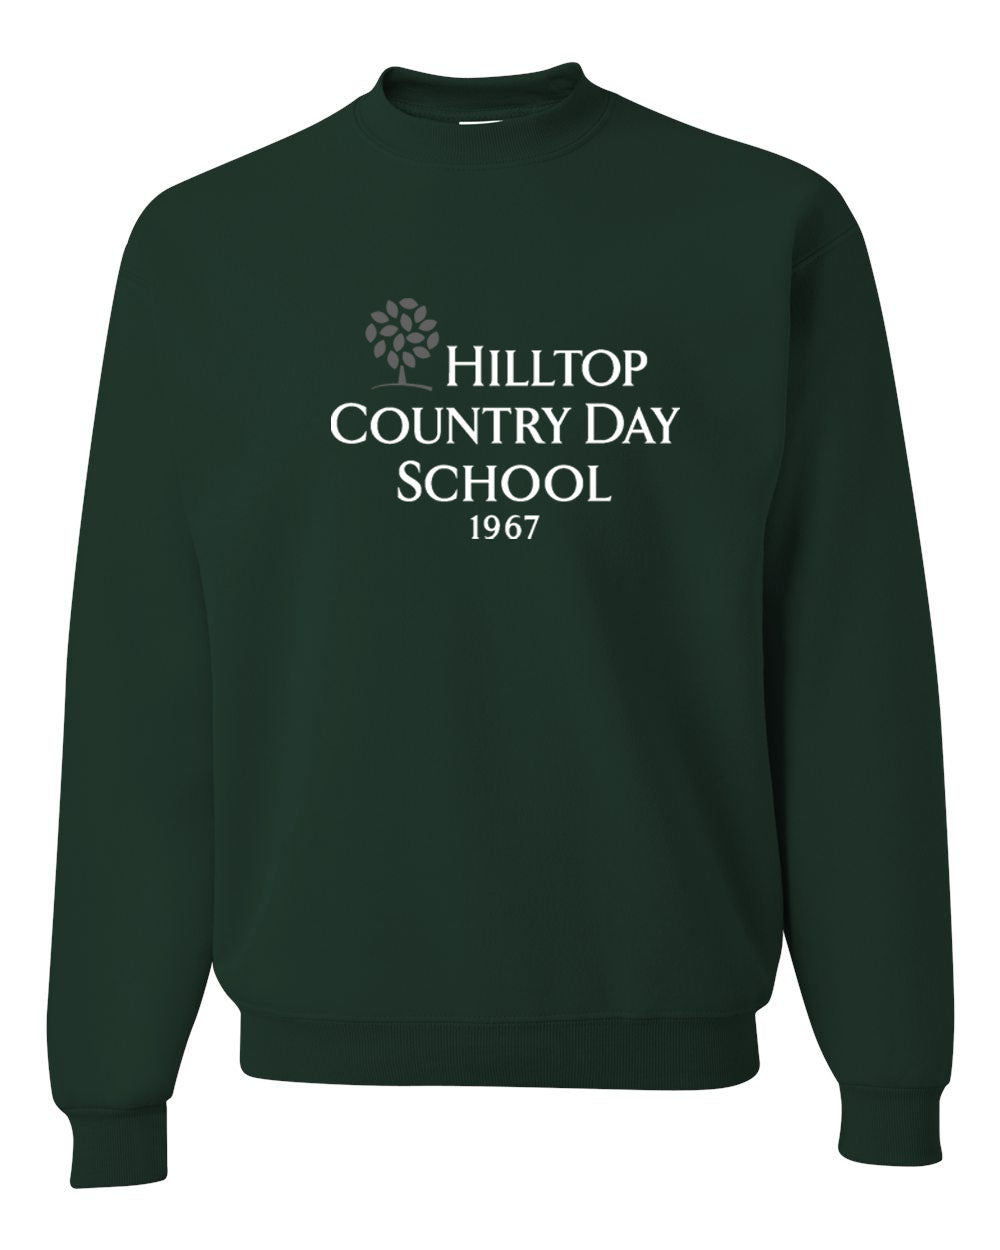 Hilltop Country Day School Design 2 non hooded sweatshirt